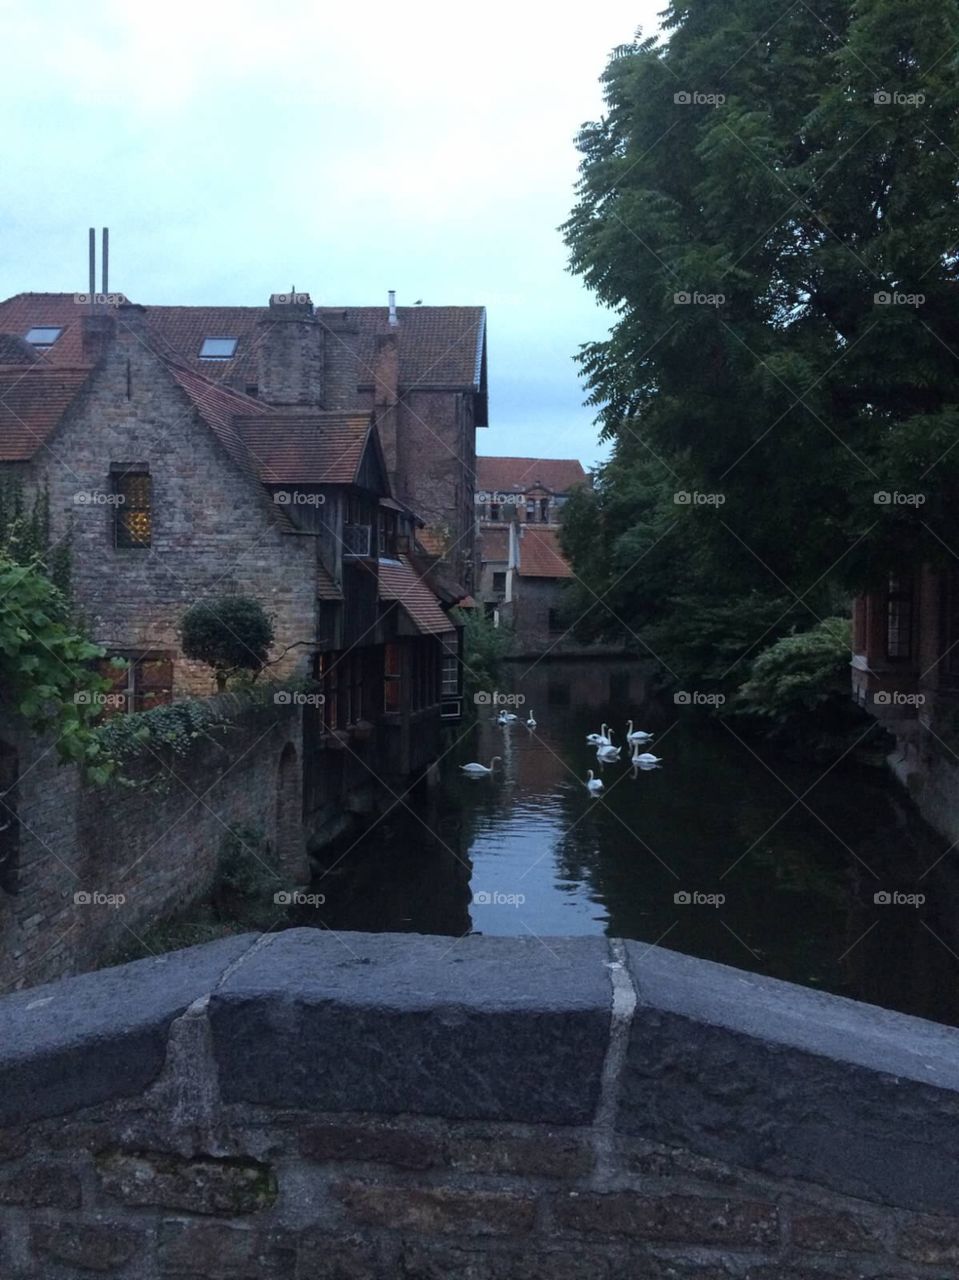 Swans in Brugge . Pond in Brugge Belgium 